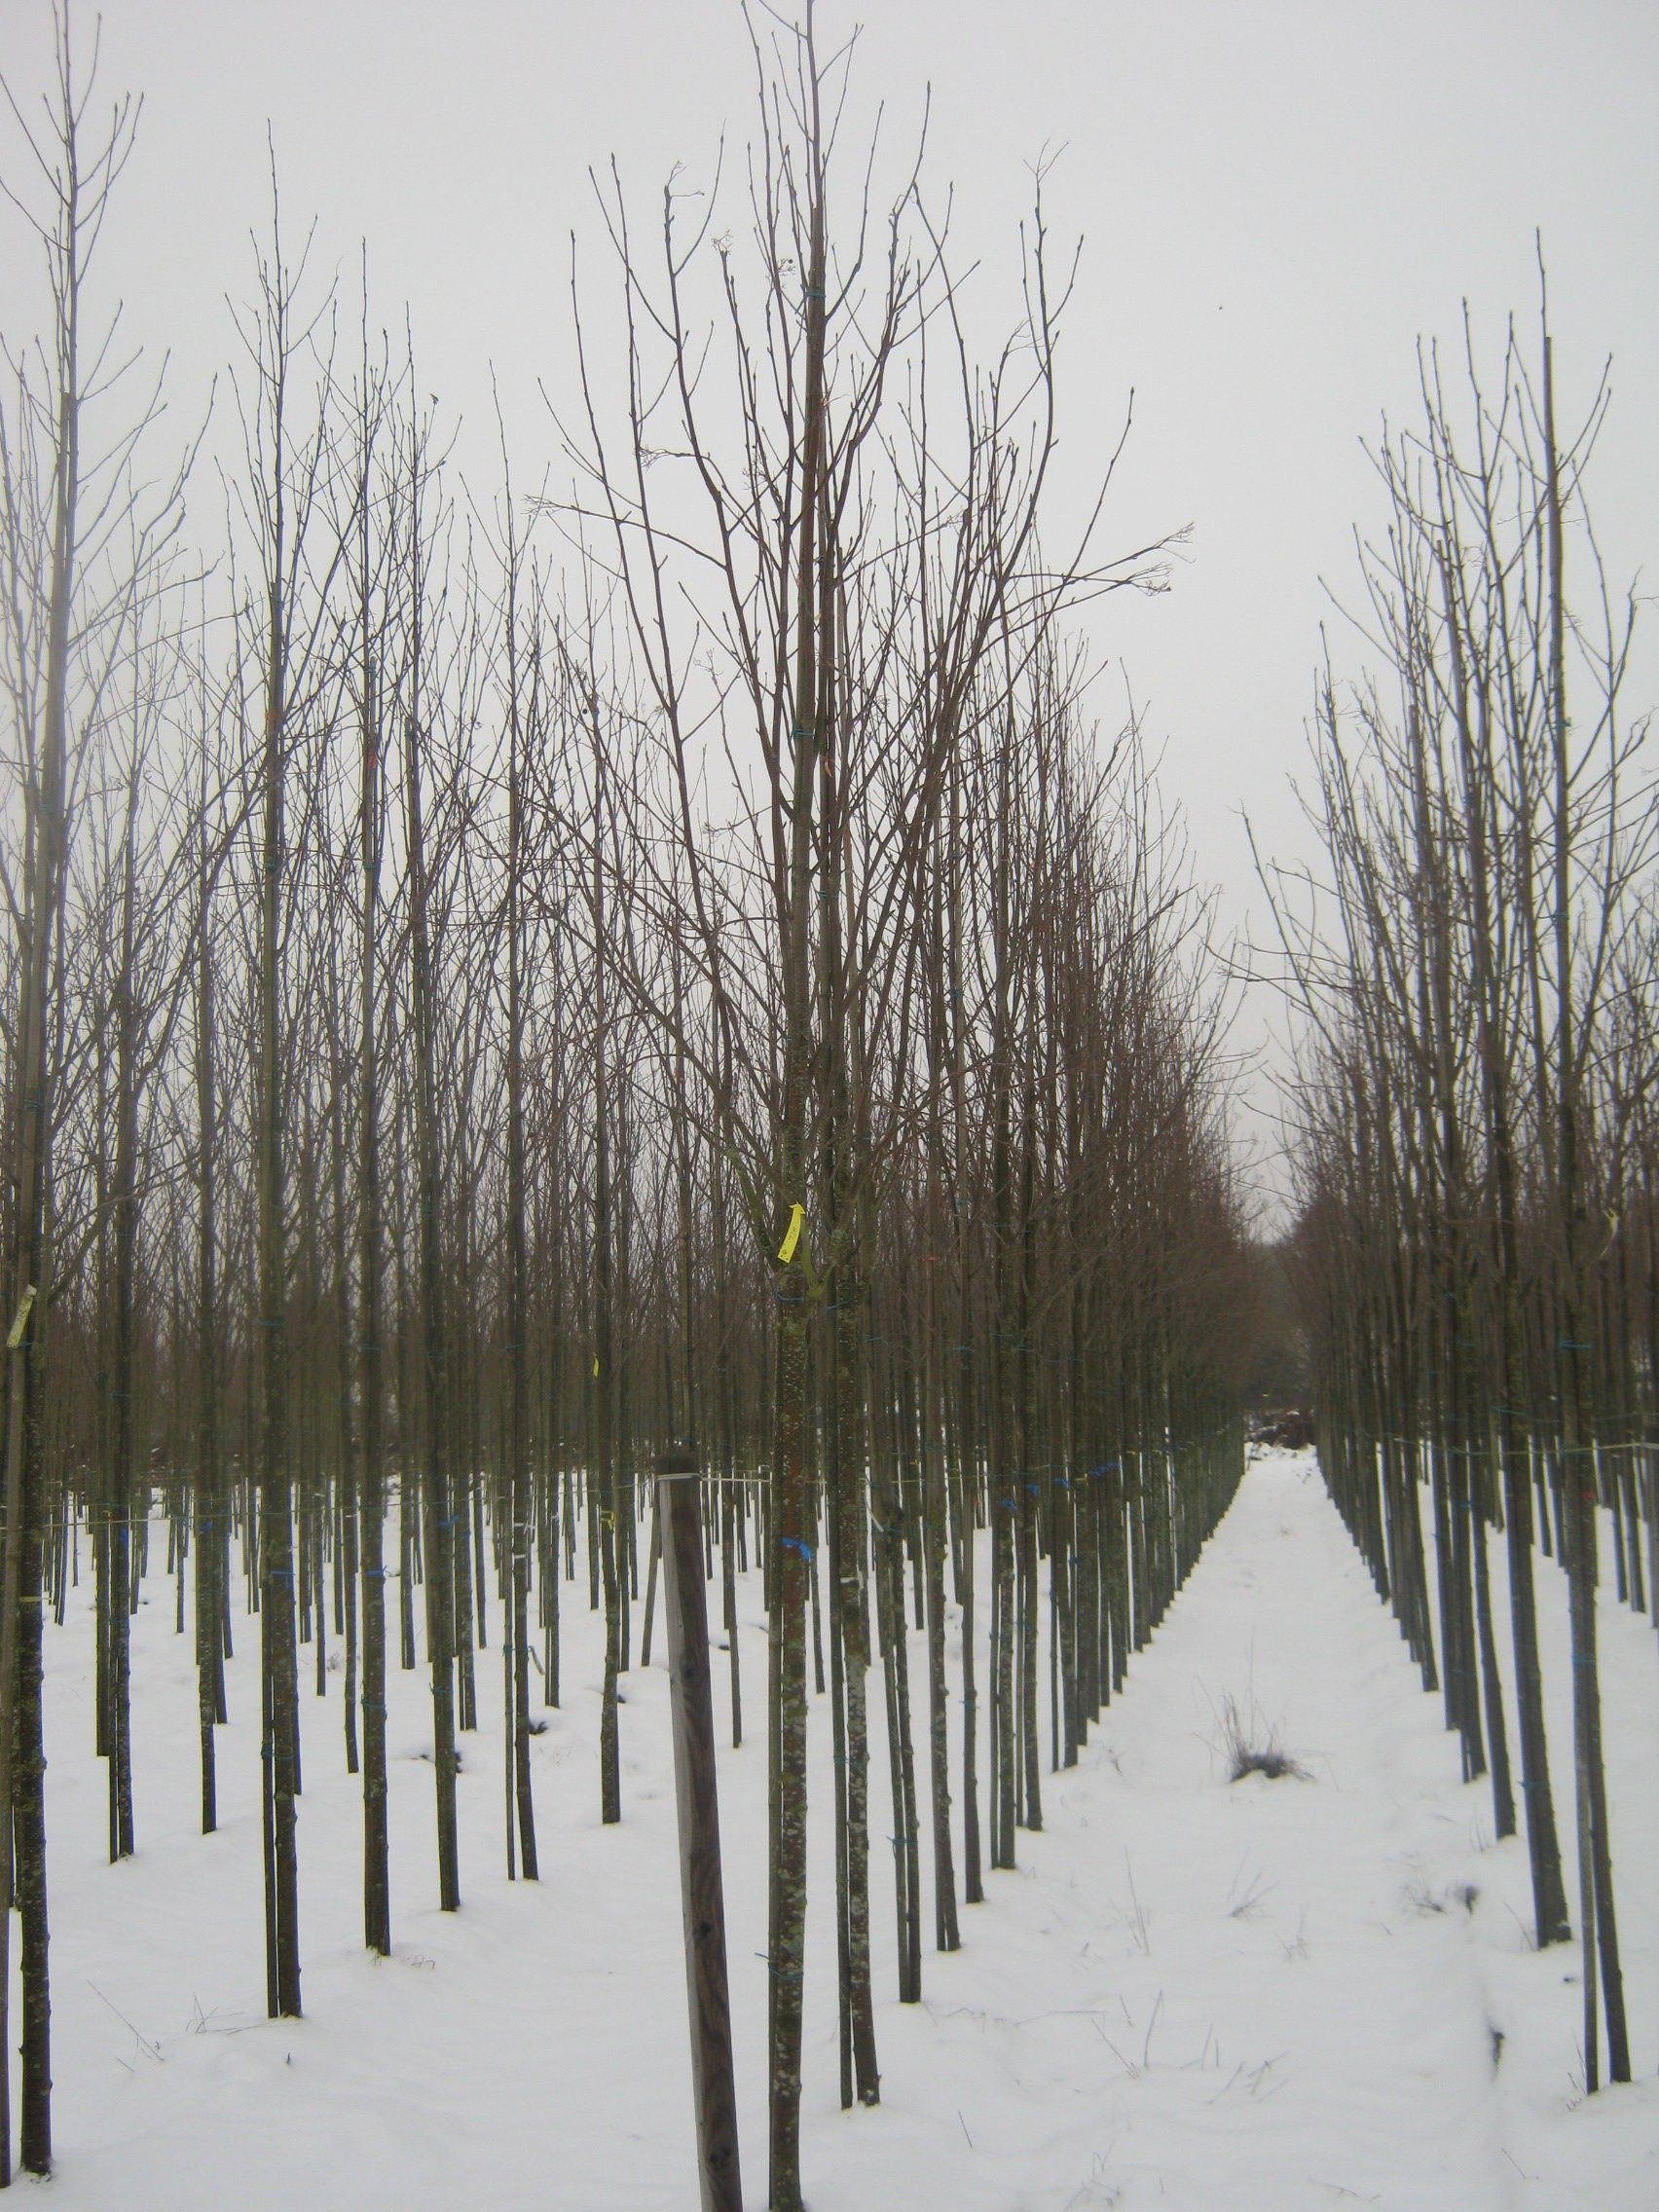 Sorbus aucuparis Asplenfolia semi mature trees in winter in snow growing in field